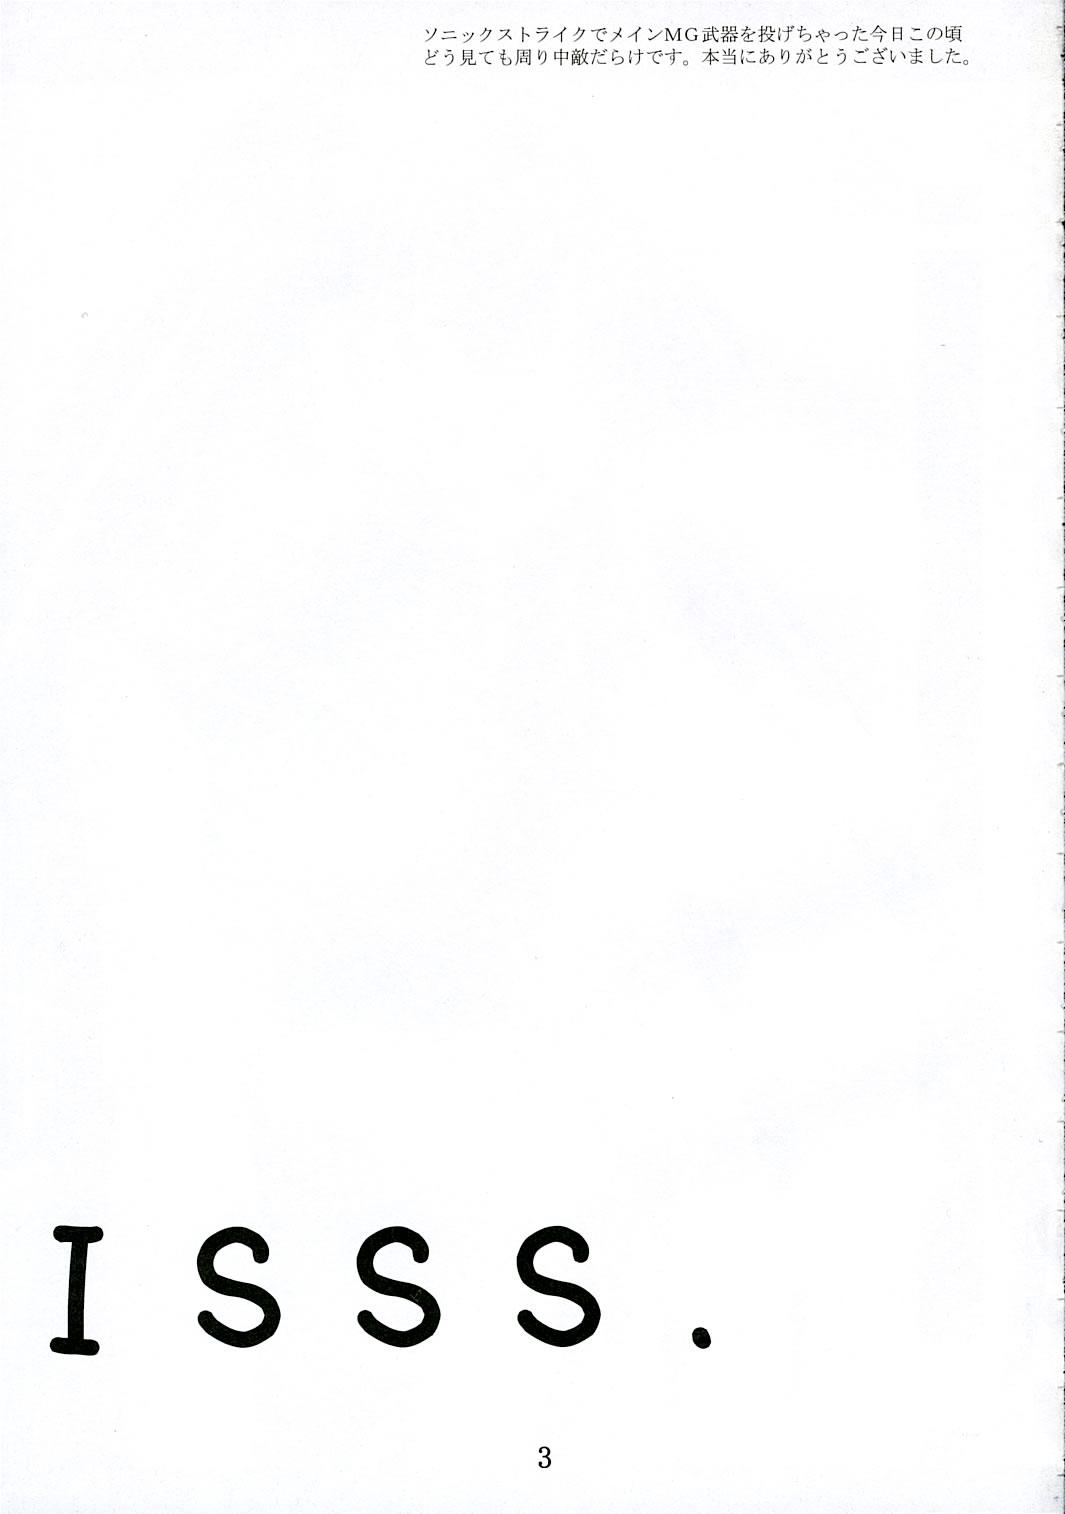 ISSS. 1